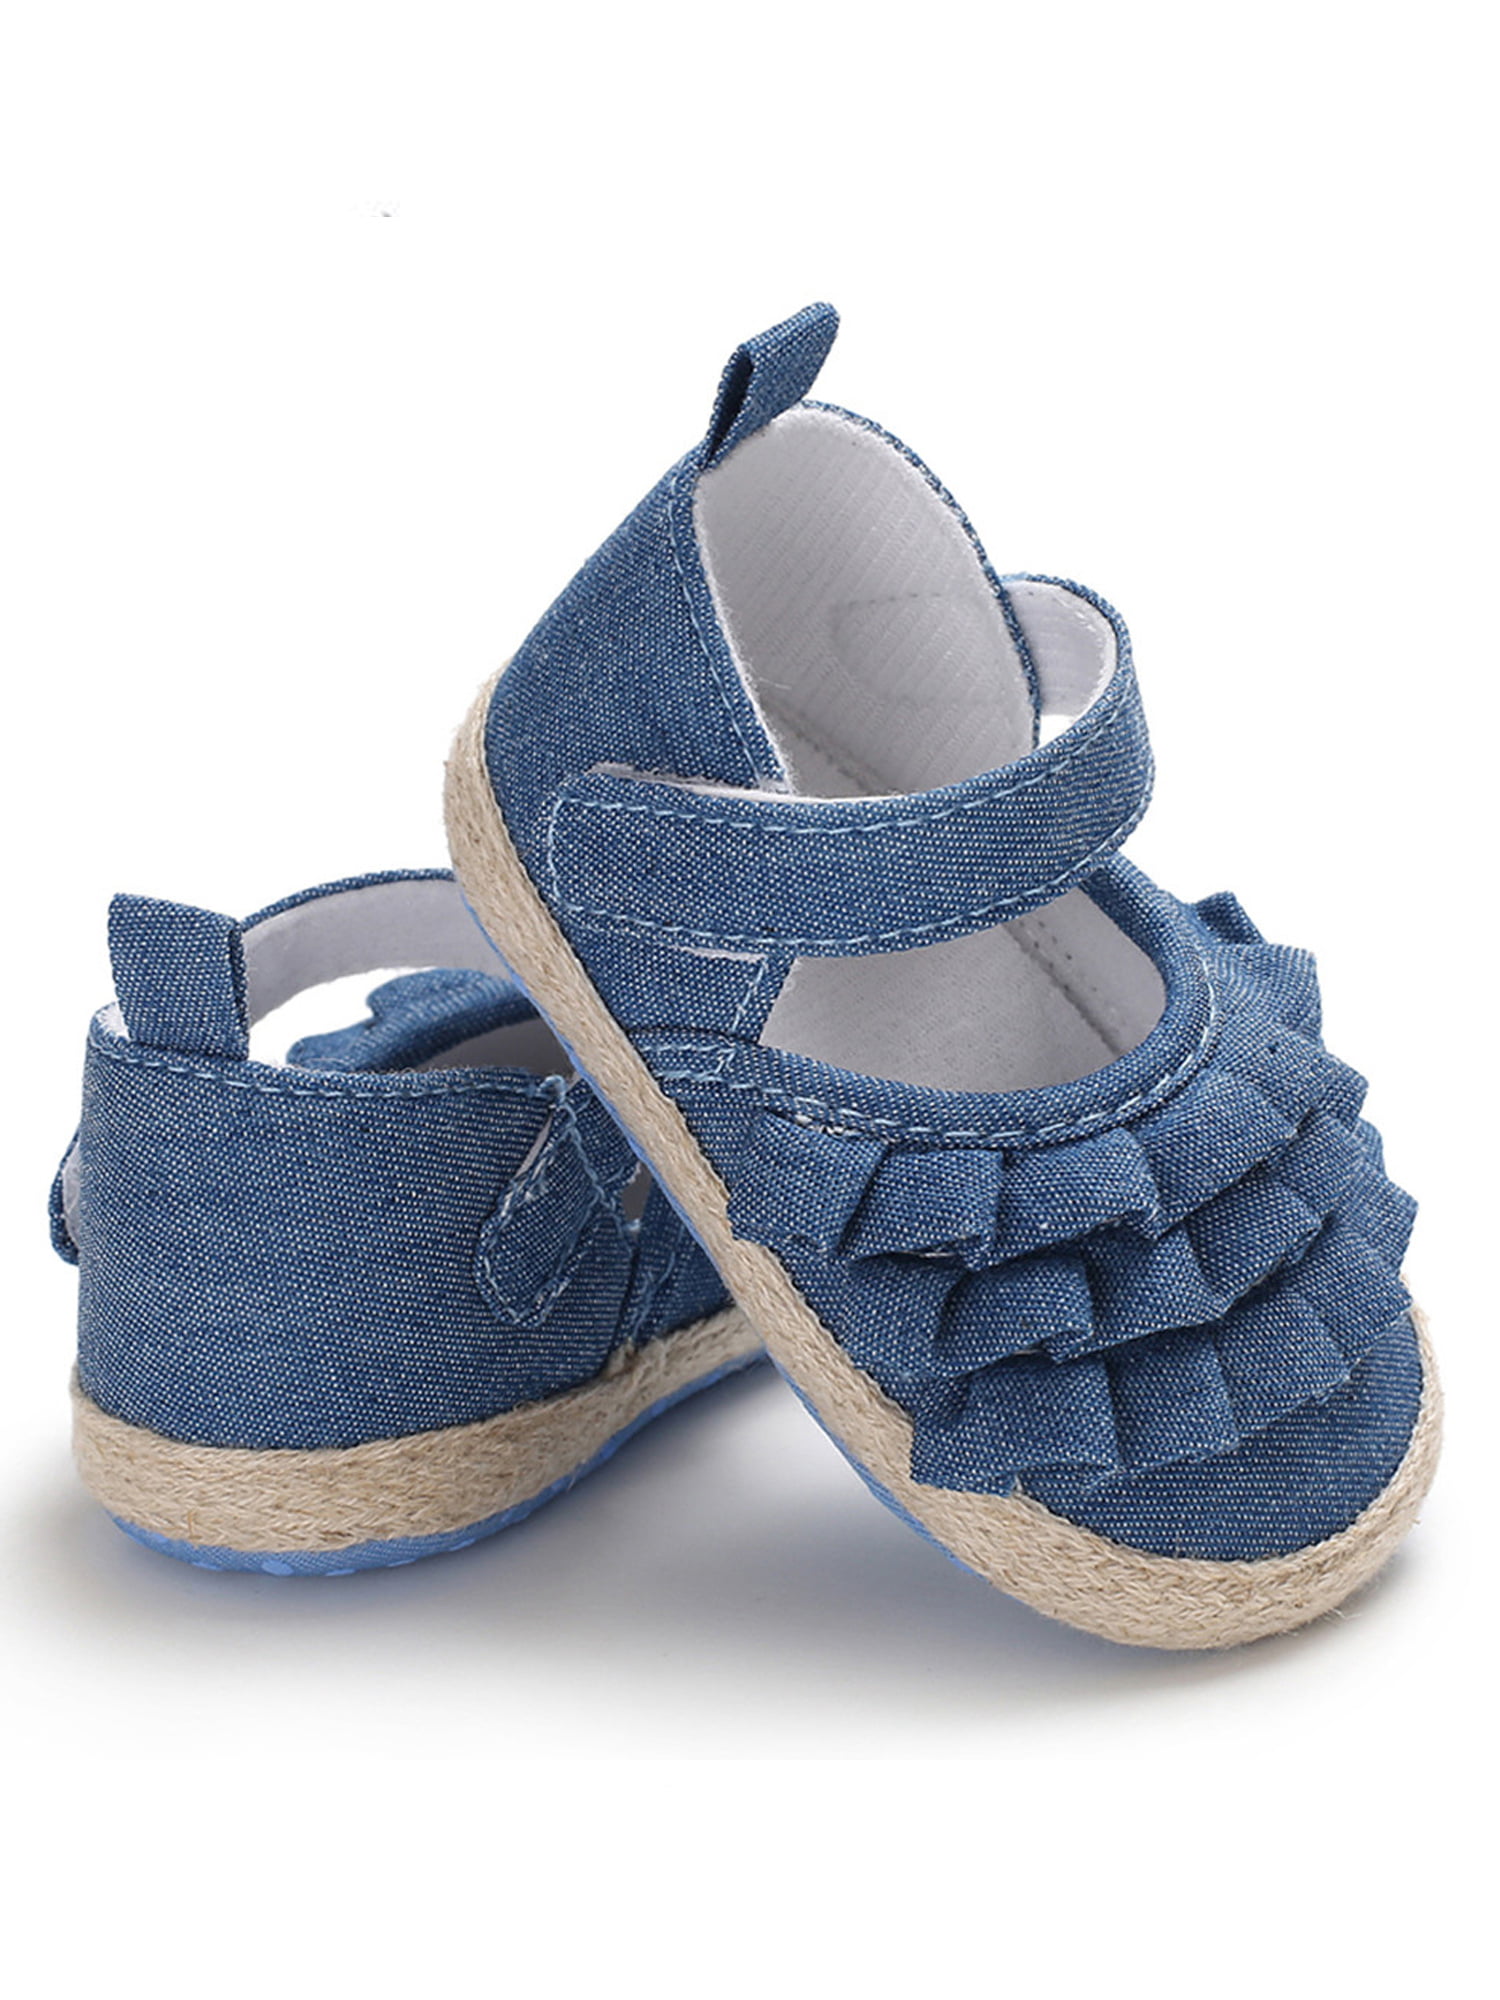 baby shoes in walmart